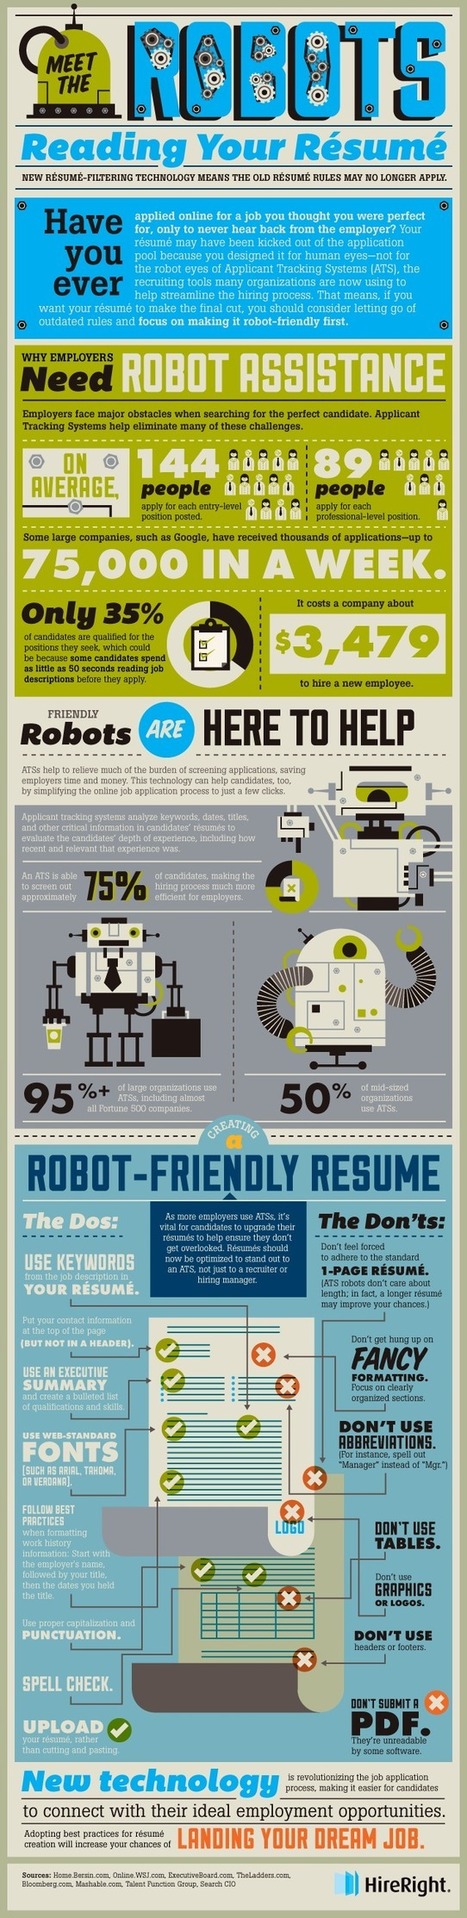 How to Create A Robot-Friendly Résumé to Land Your Dream Job | Robótica Educativa! | Scoop.it